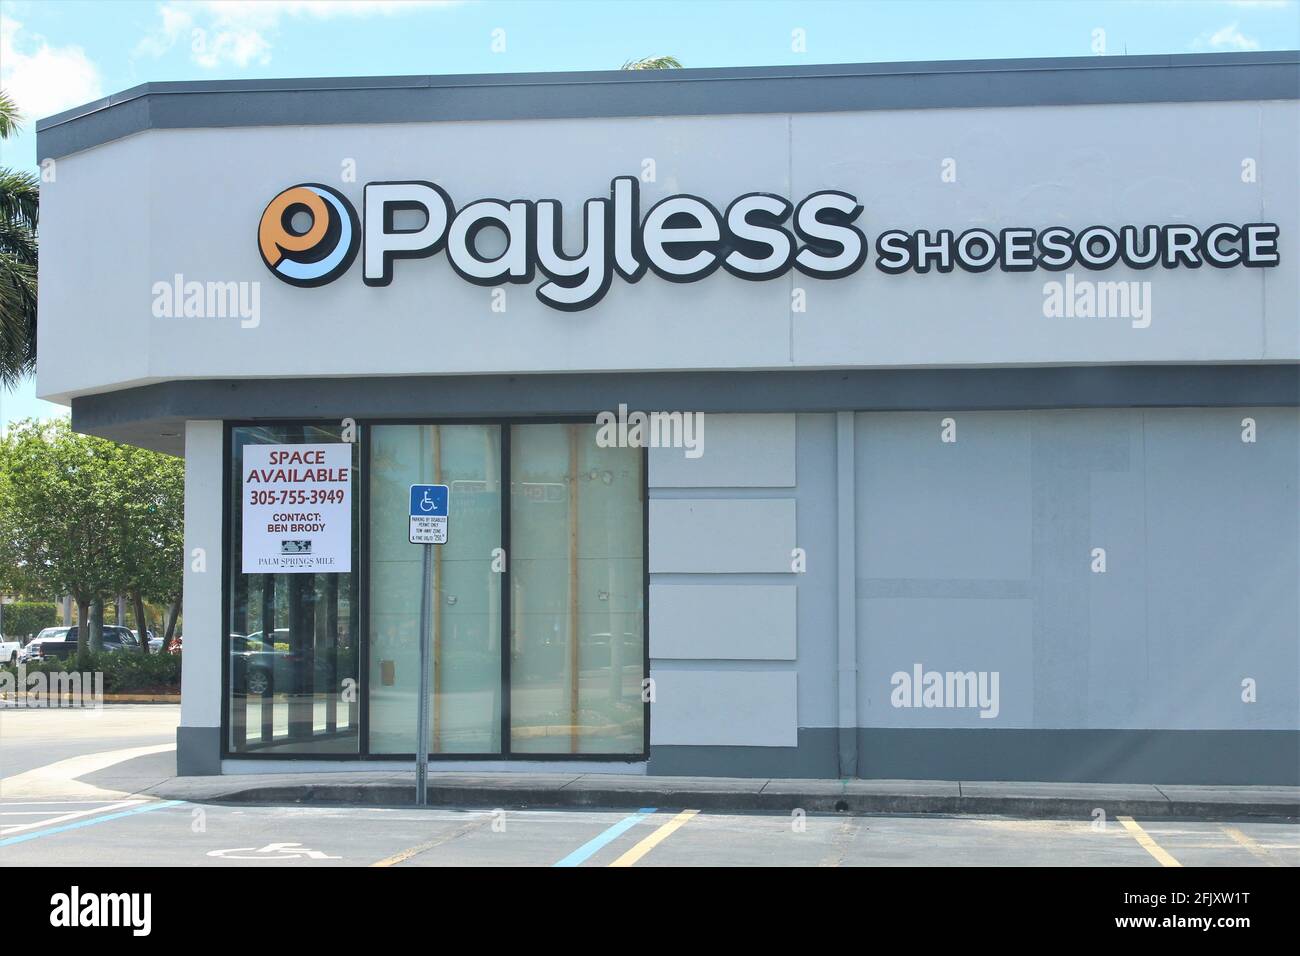 Negozio Payless Shoe a Hialeah, contea di Miami dade. Chiuso di recente. Payless Shoe Source Inc. È un rivenditore americano di calzature a prezzi scontati. Foto Stock